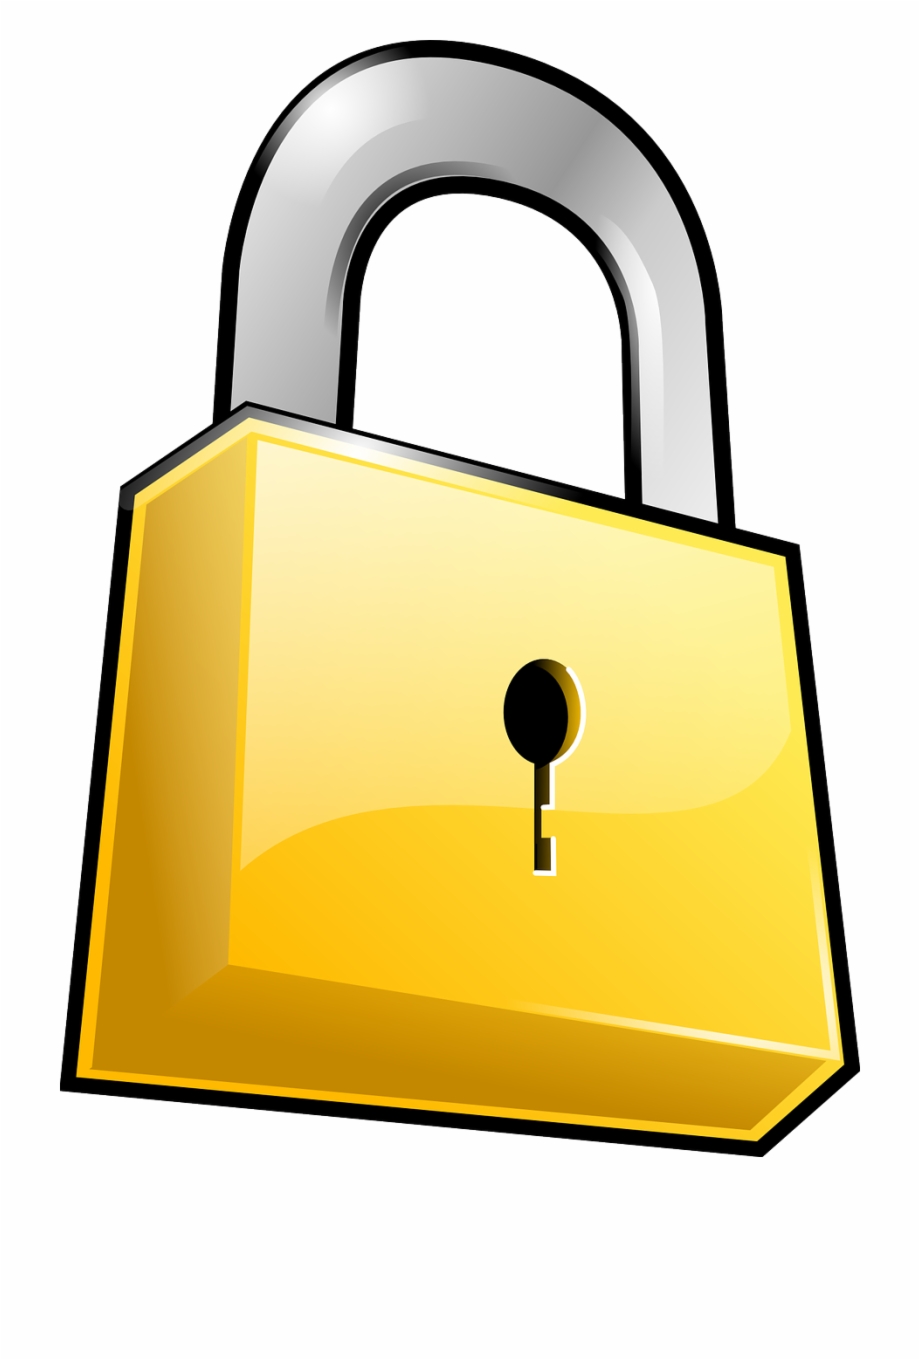 Security Lock Padlock Locked Png Image Clip Art